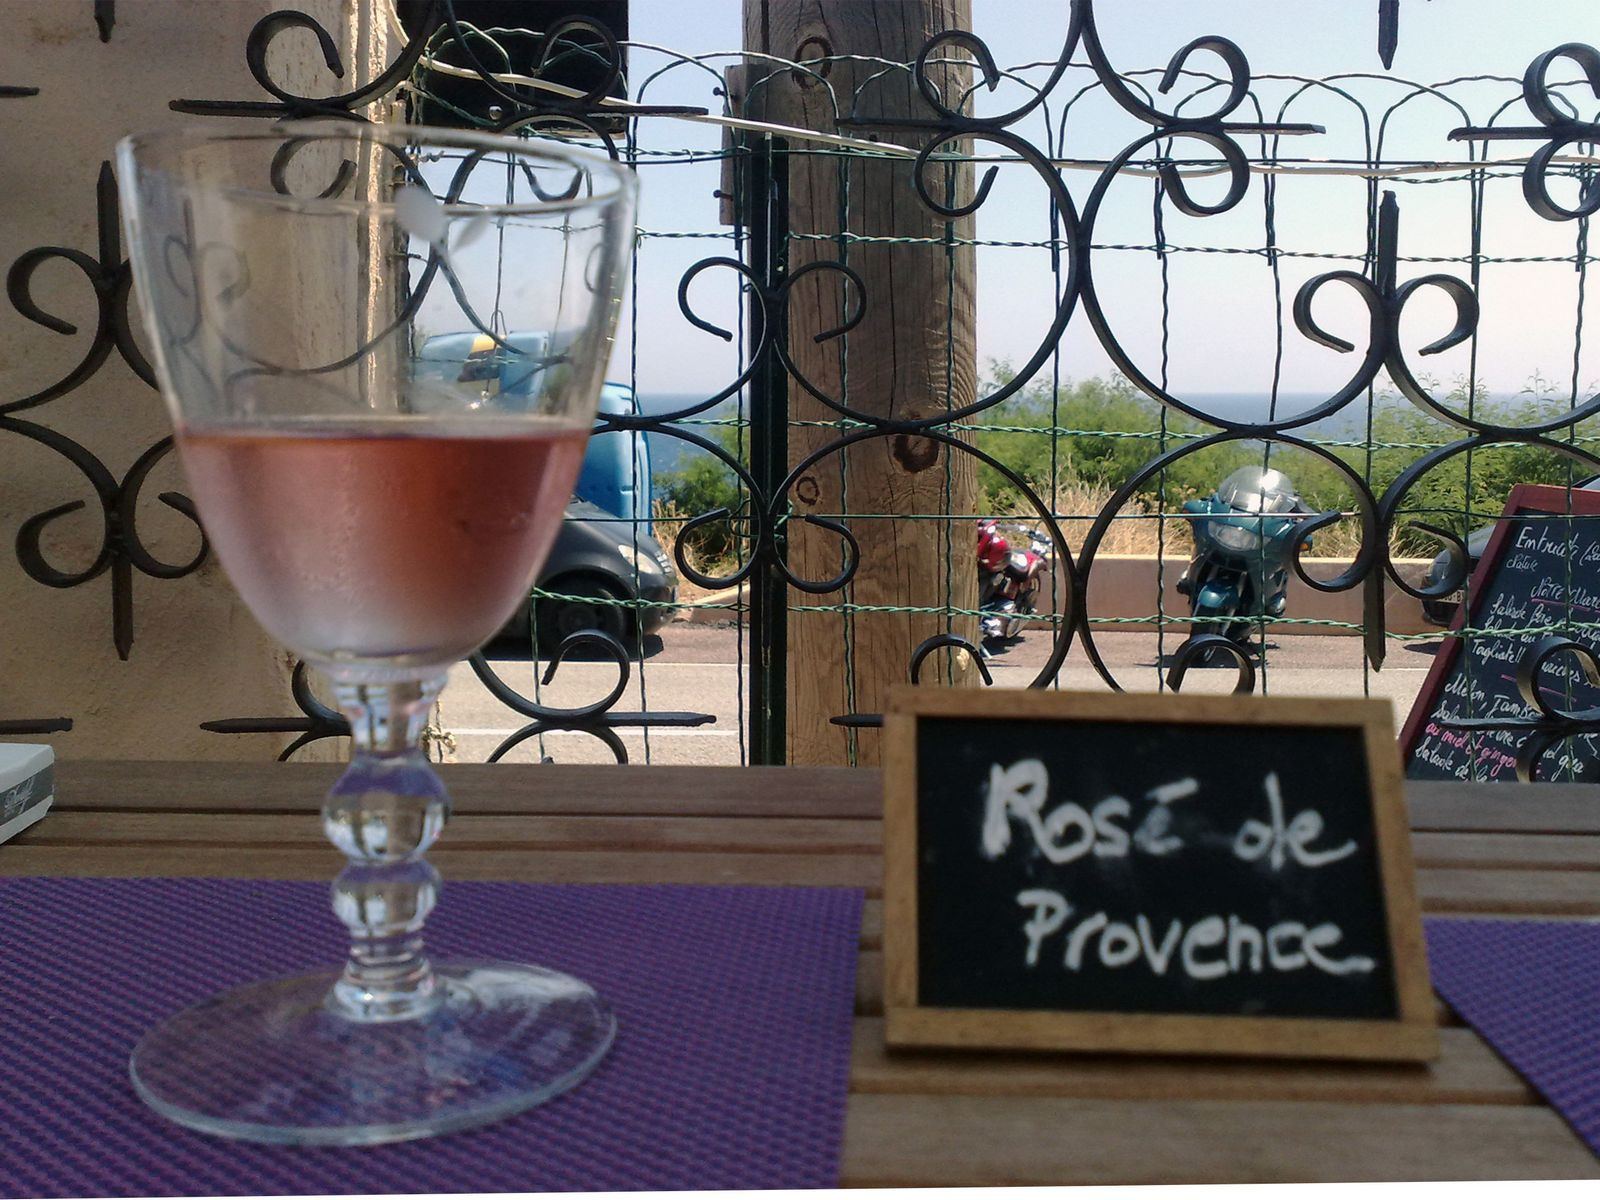 Rosé de Provence